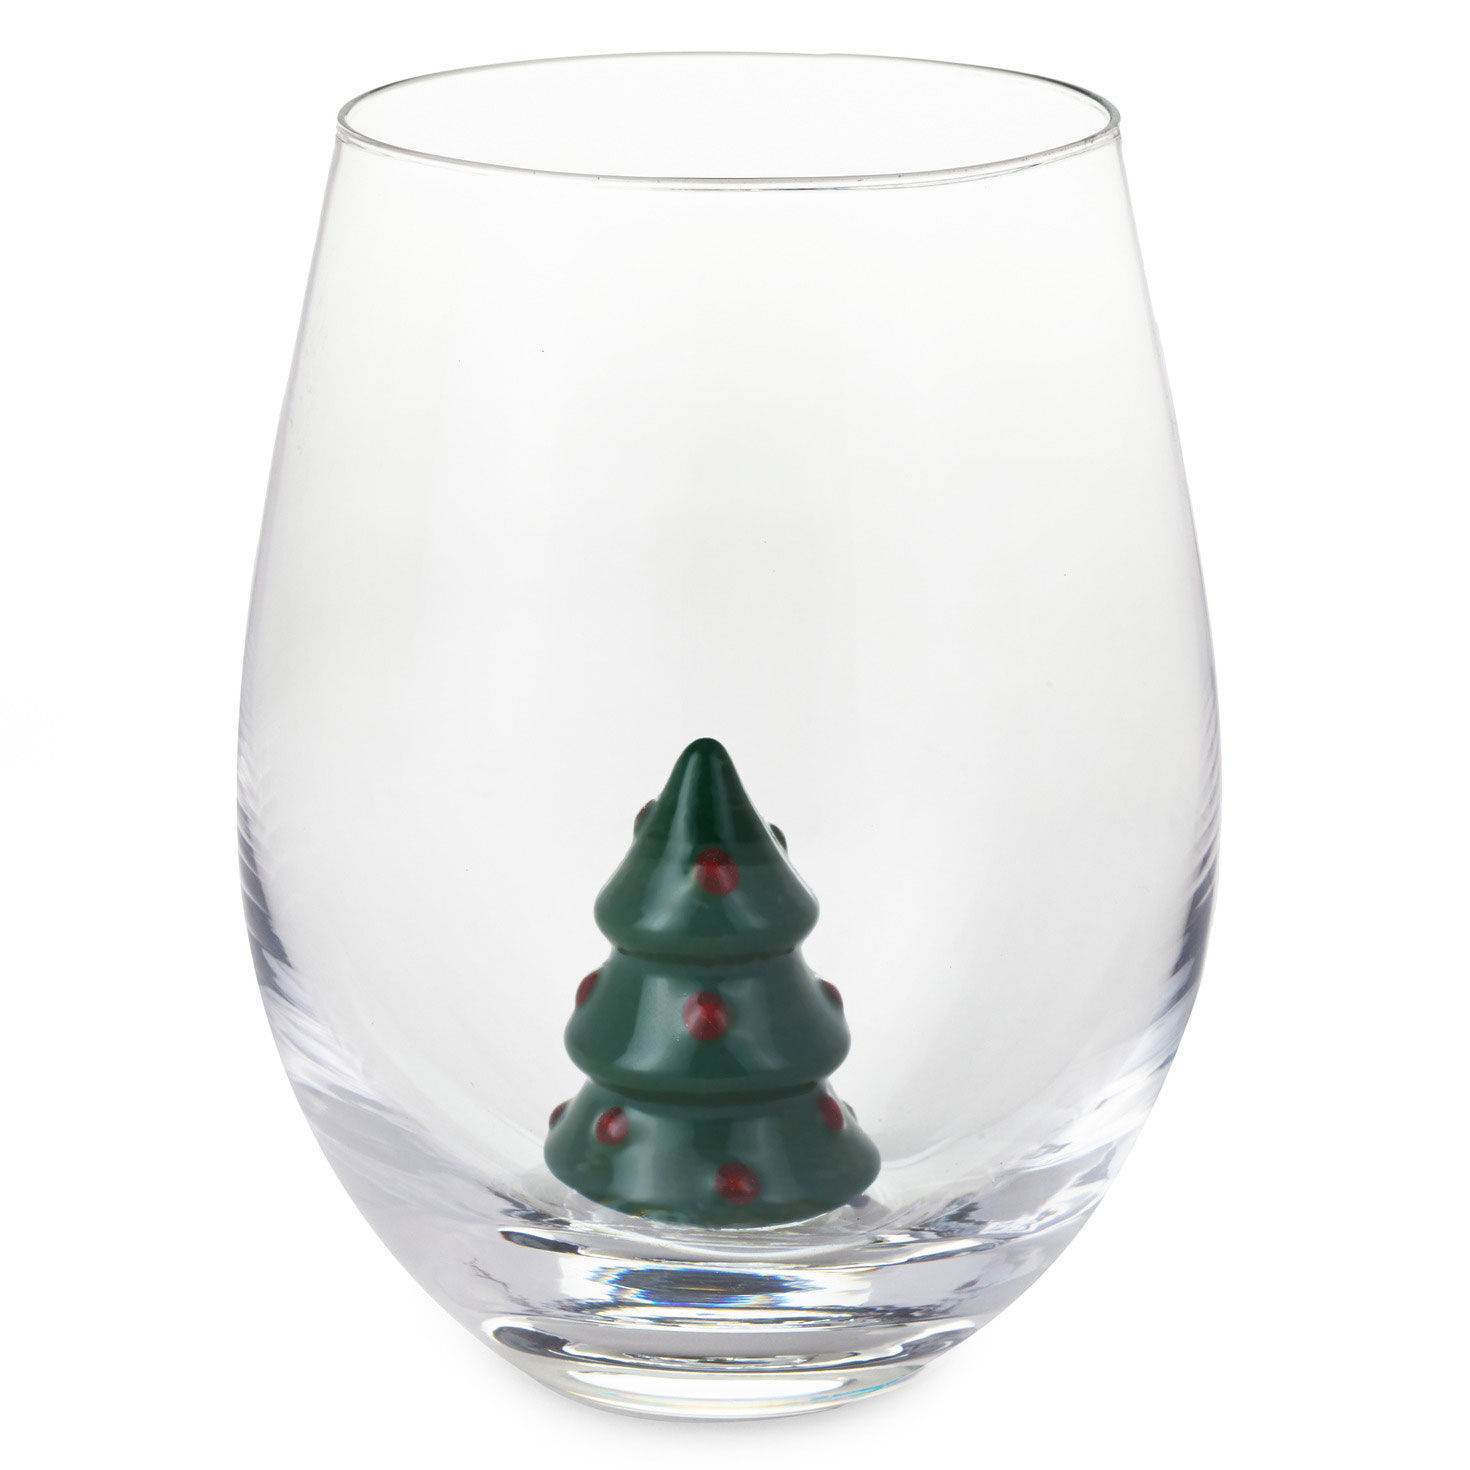 https://www.hallmark.com/dw/image/v2/AALB_PRD/on/demandware.static/-/Sites-hallmark-master/default/dw071b5d46/images/finished-goods/products/1XKT5041/Stemless-Wine-Glass-With-Christmas-Tree-Inside_1XKT5041_01.jpg?sfrm=jpg